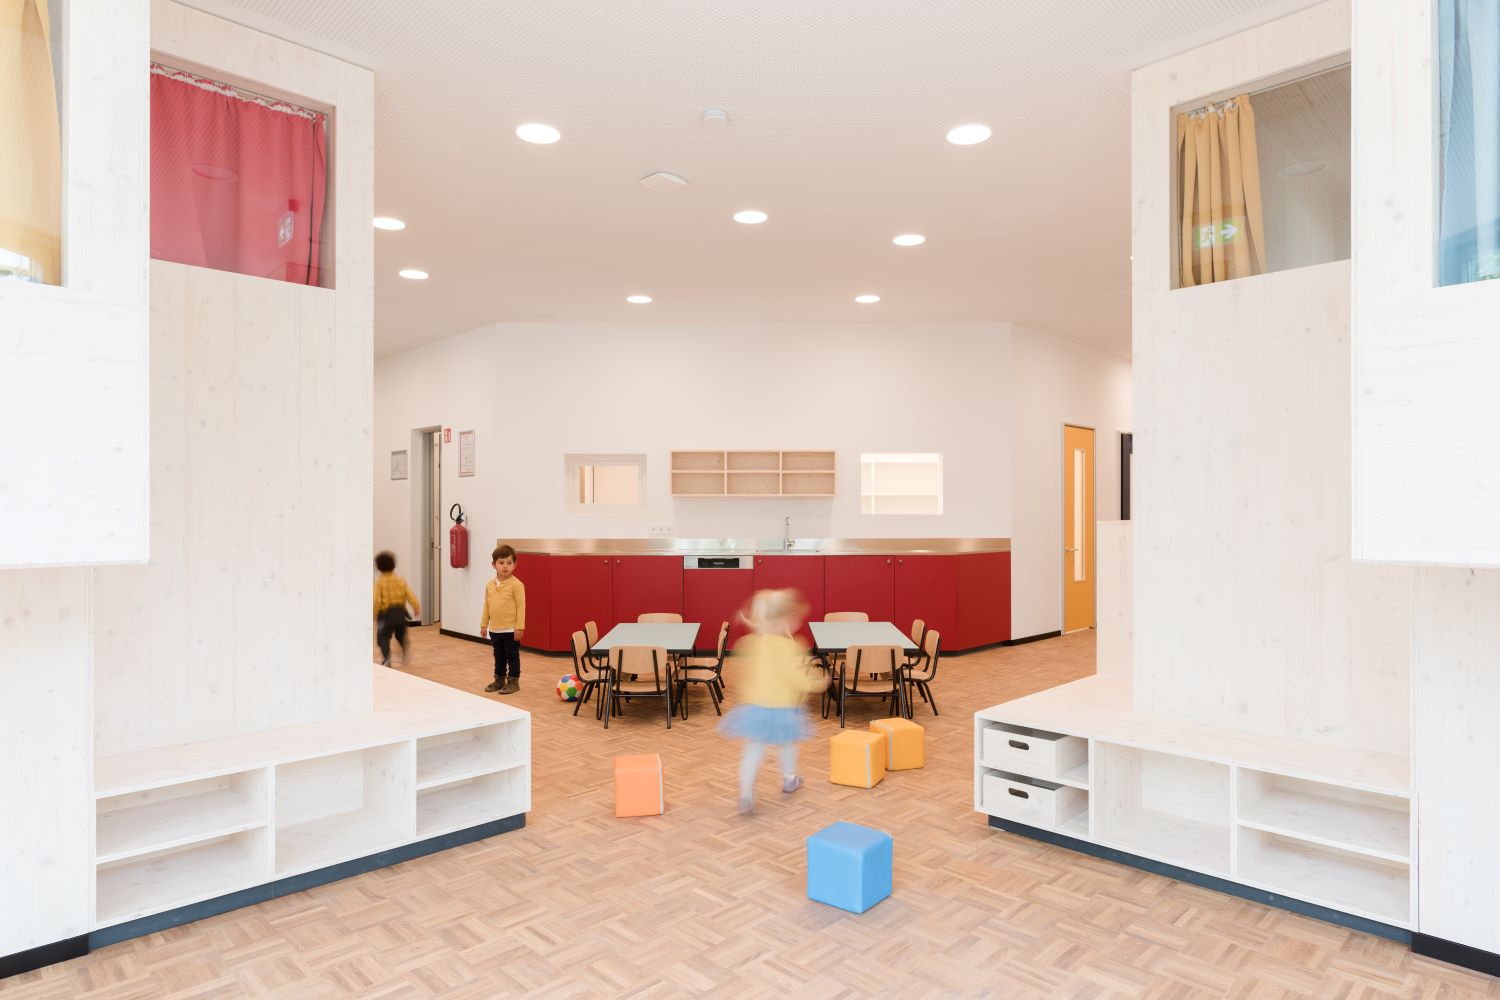 Kindergarten, play, children, interior, modularity